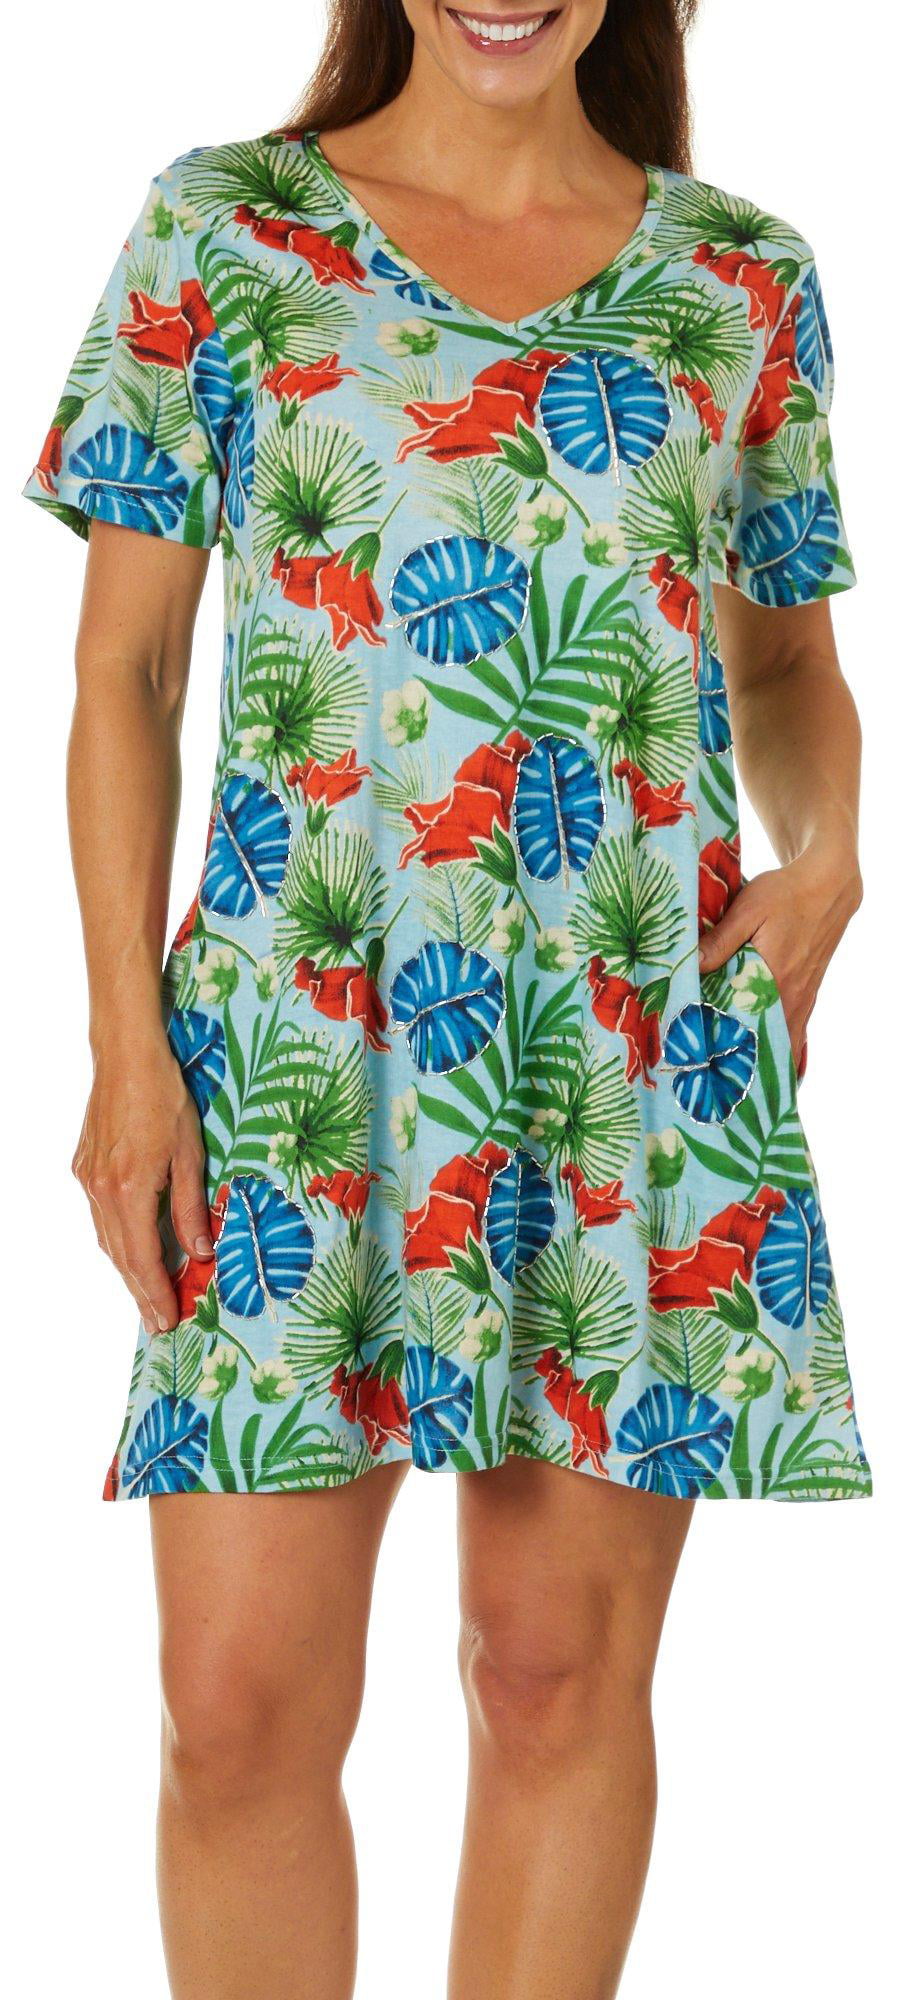 Coral Bay - Coral Bay Womens Tropical Print Short Sleeve Leisure Dress ...